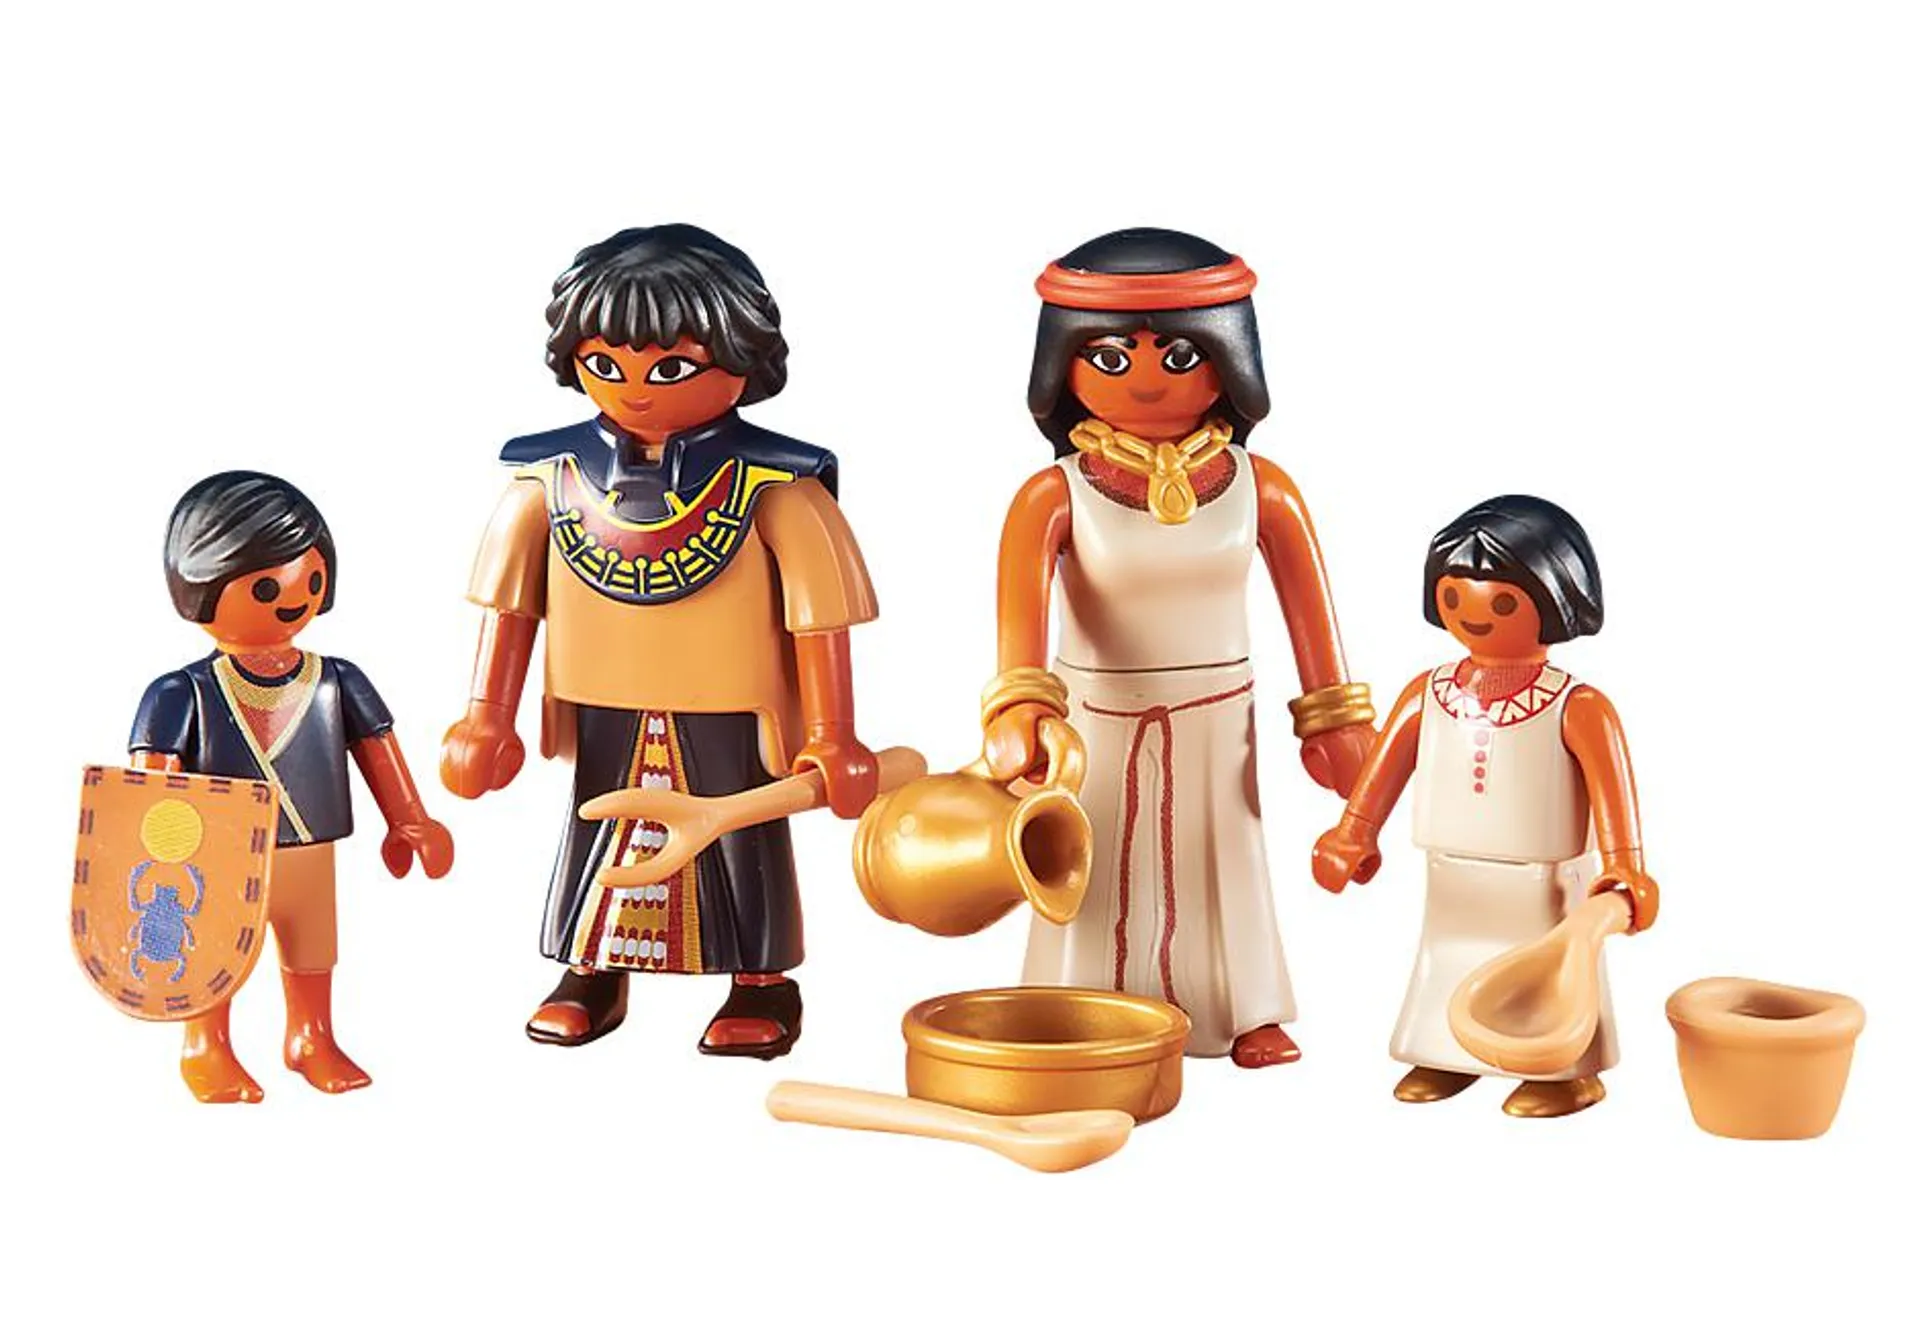 Familia Egipcia